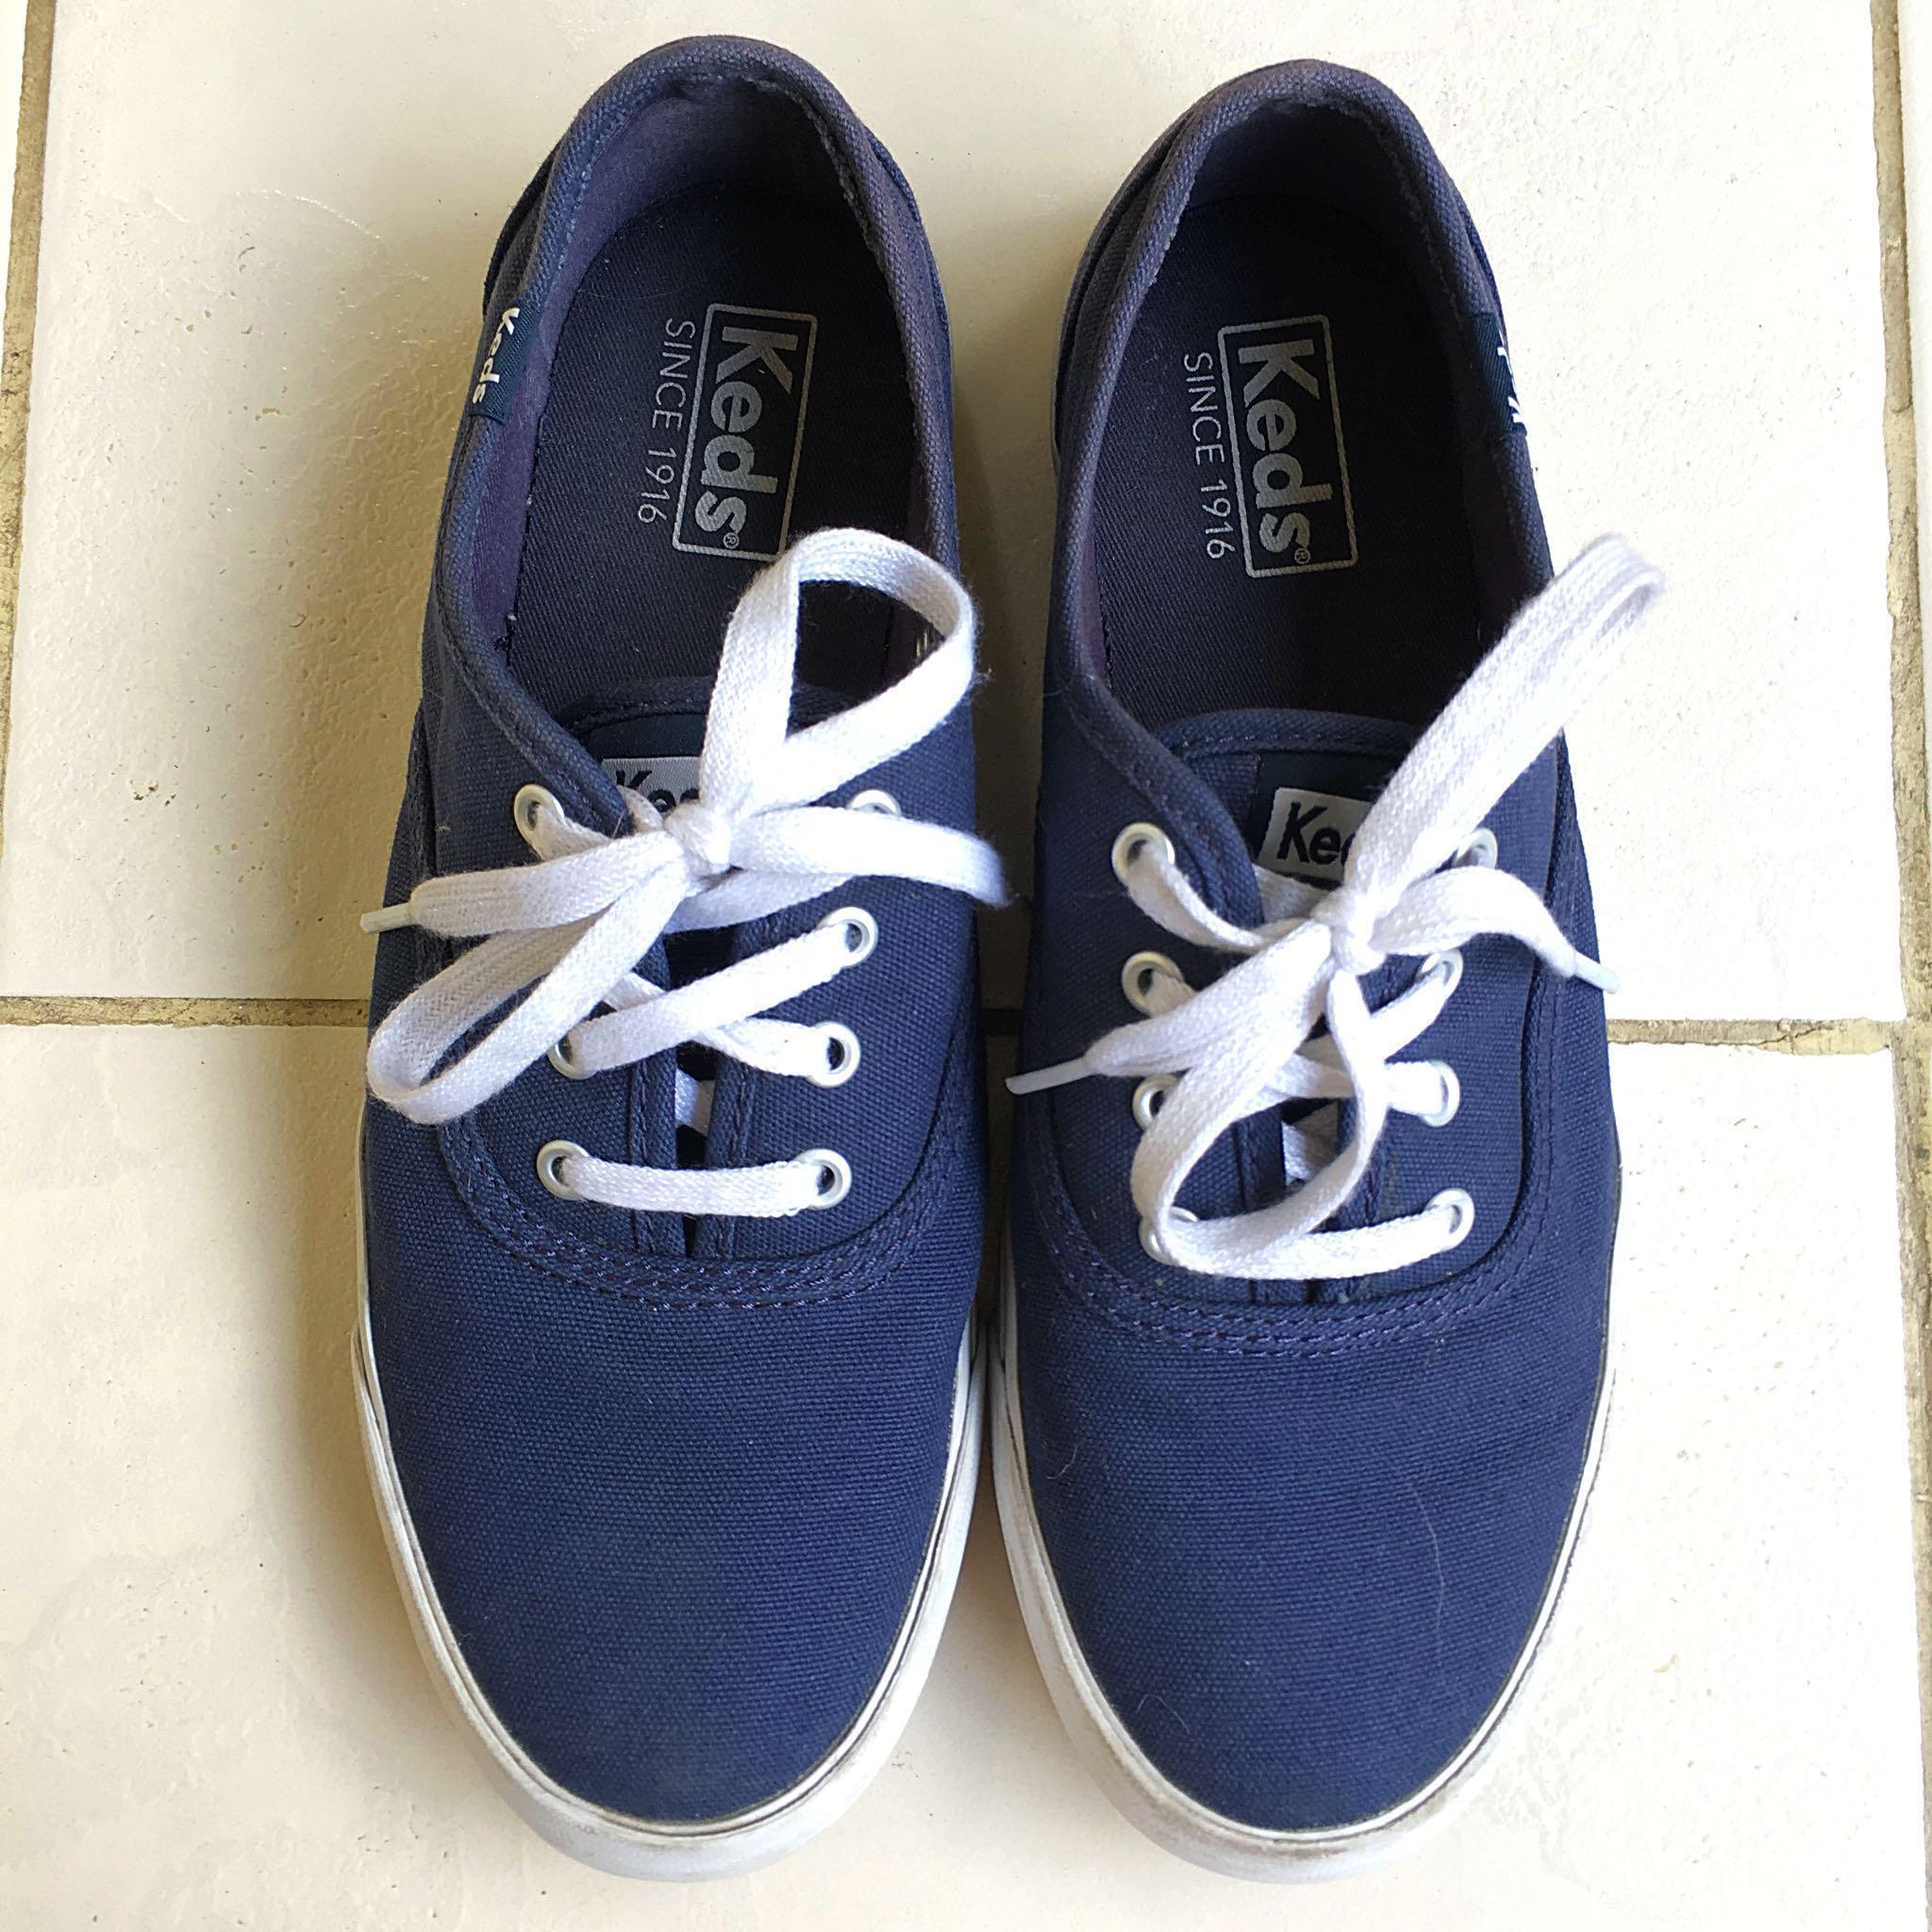 keds navy blue sneakers